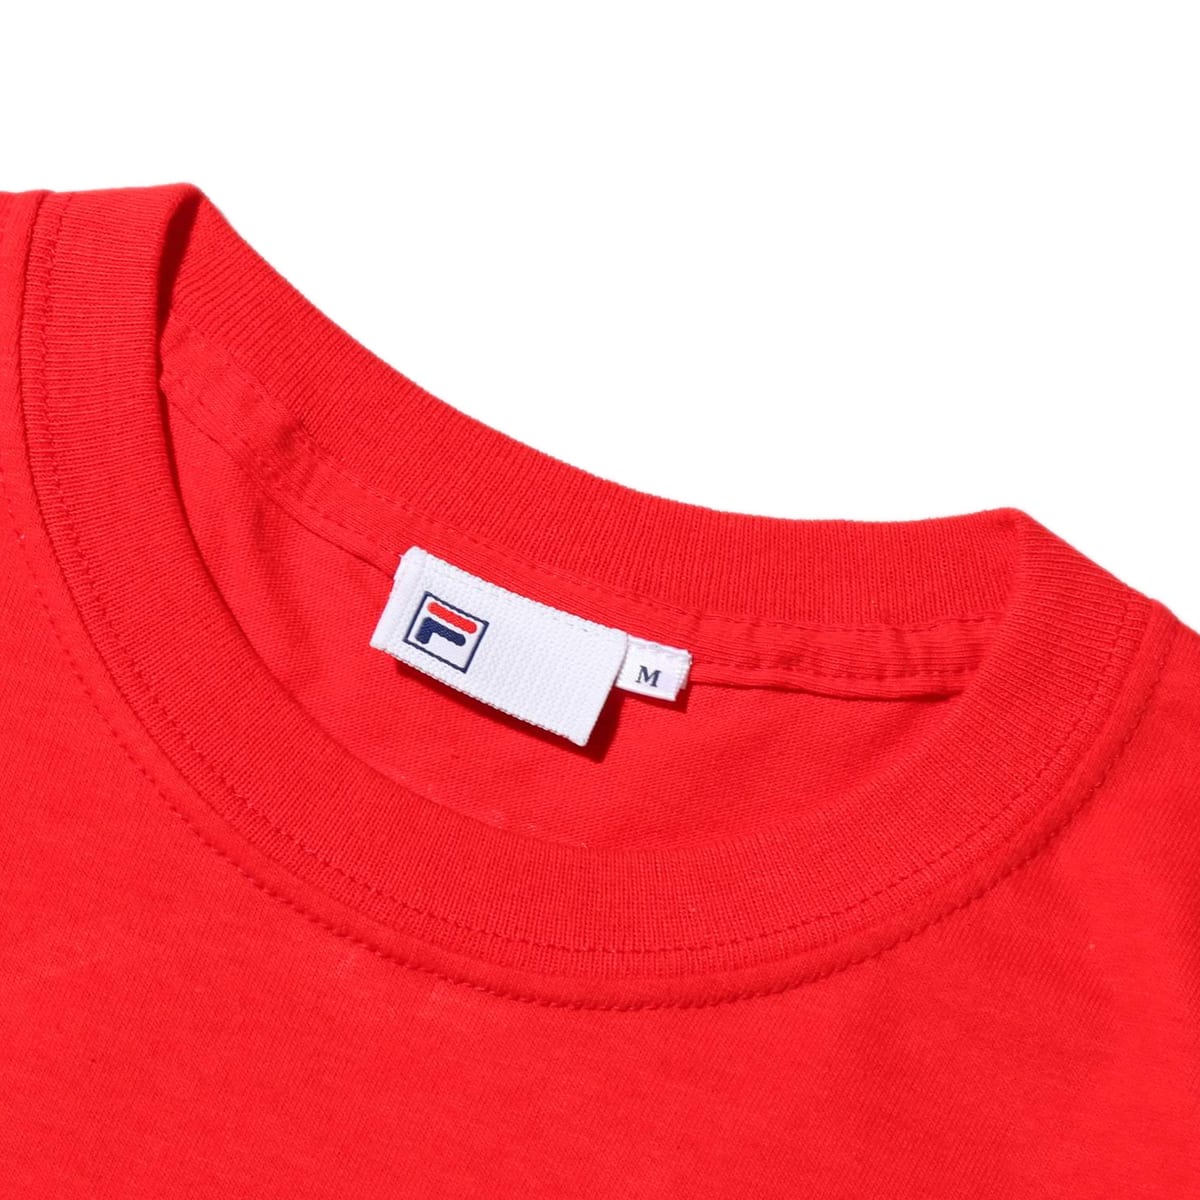 FILA x atmos Square LOGO embroidery T-Shirt RED